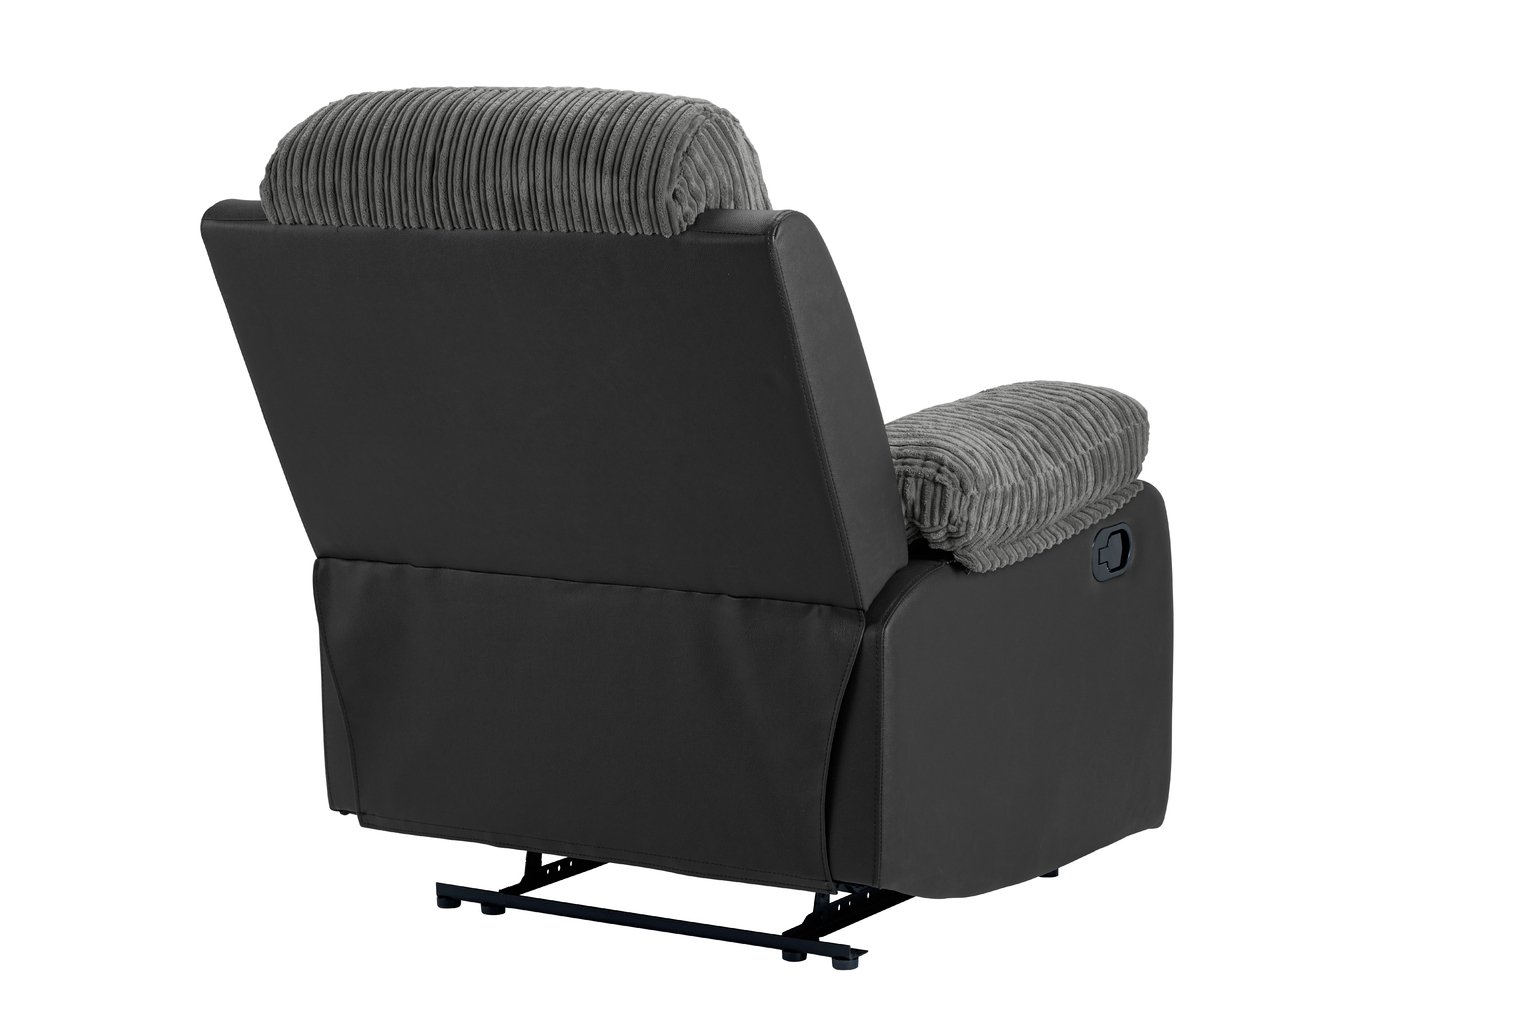 Argos Home Bradley Manual - Recliner Chair Reviews